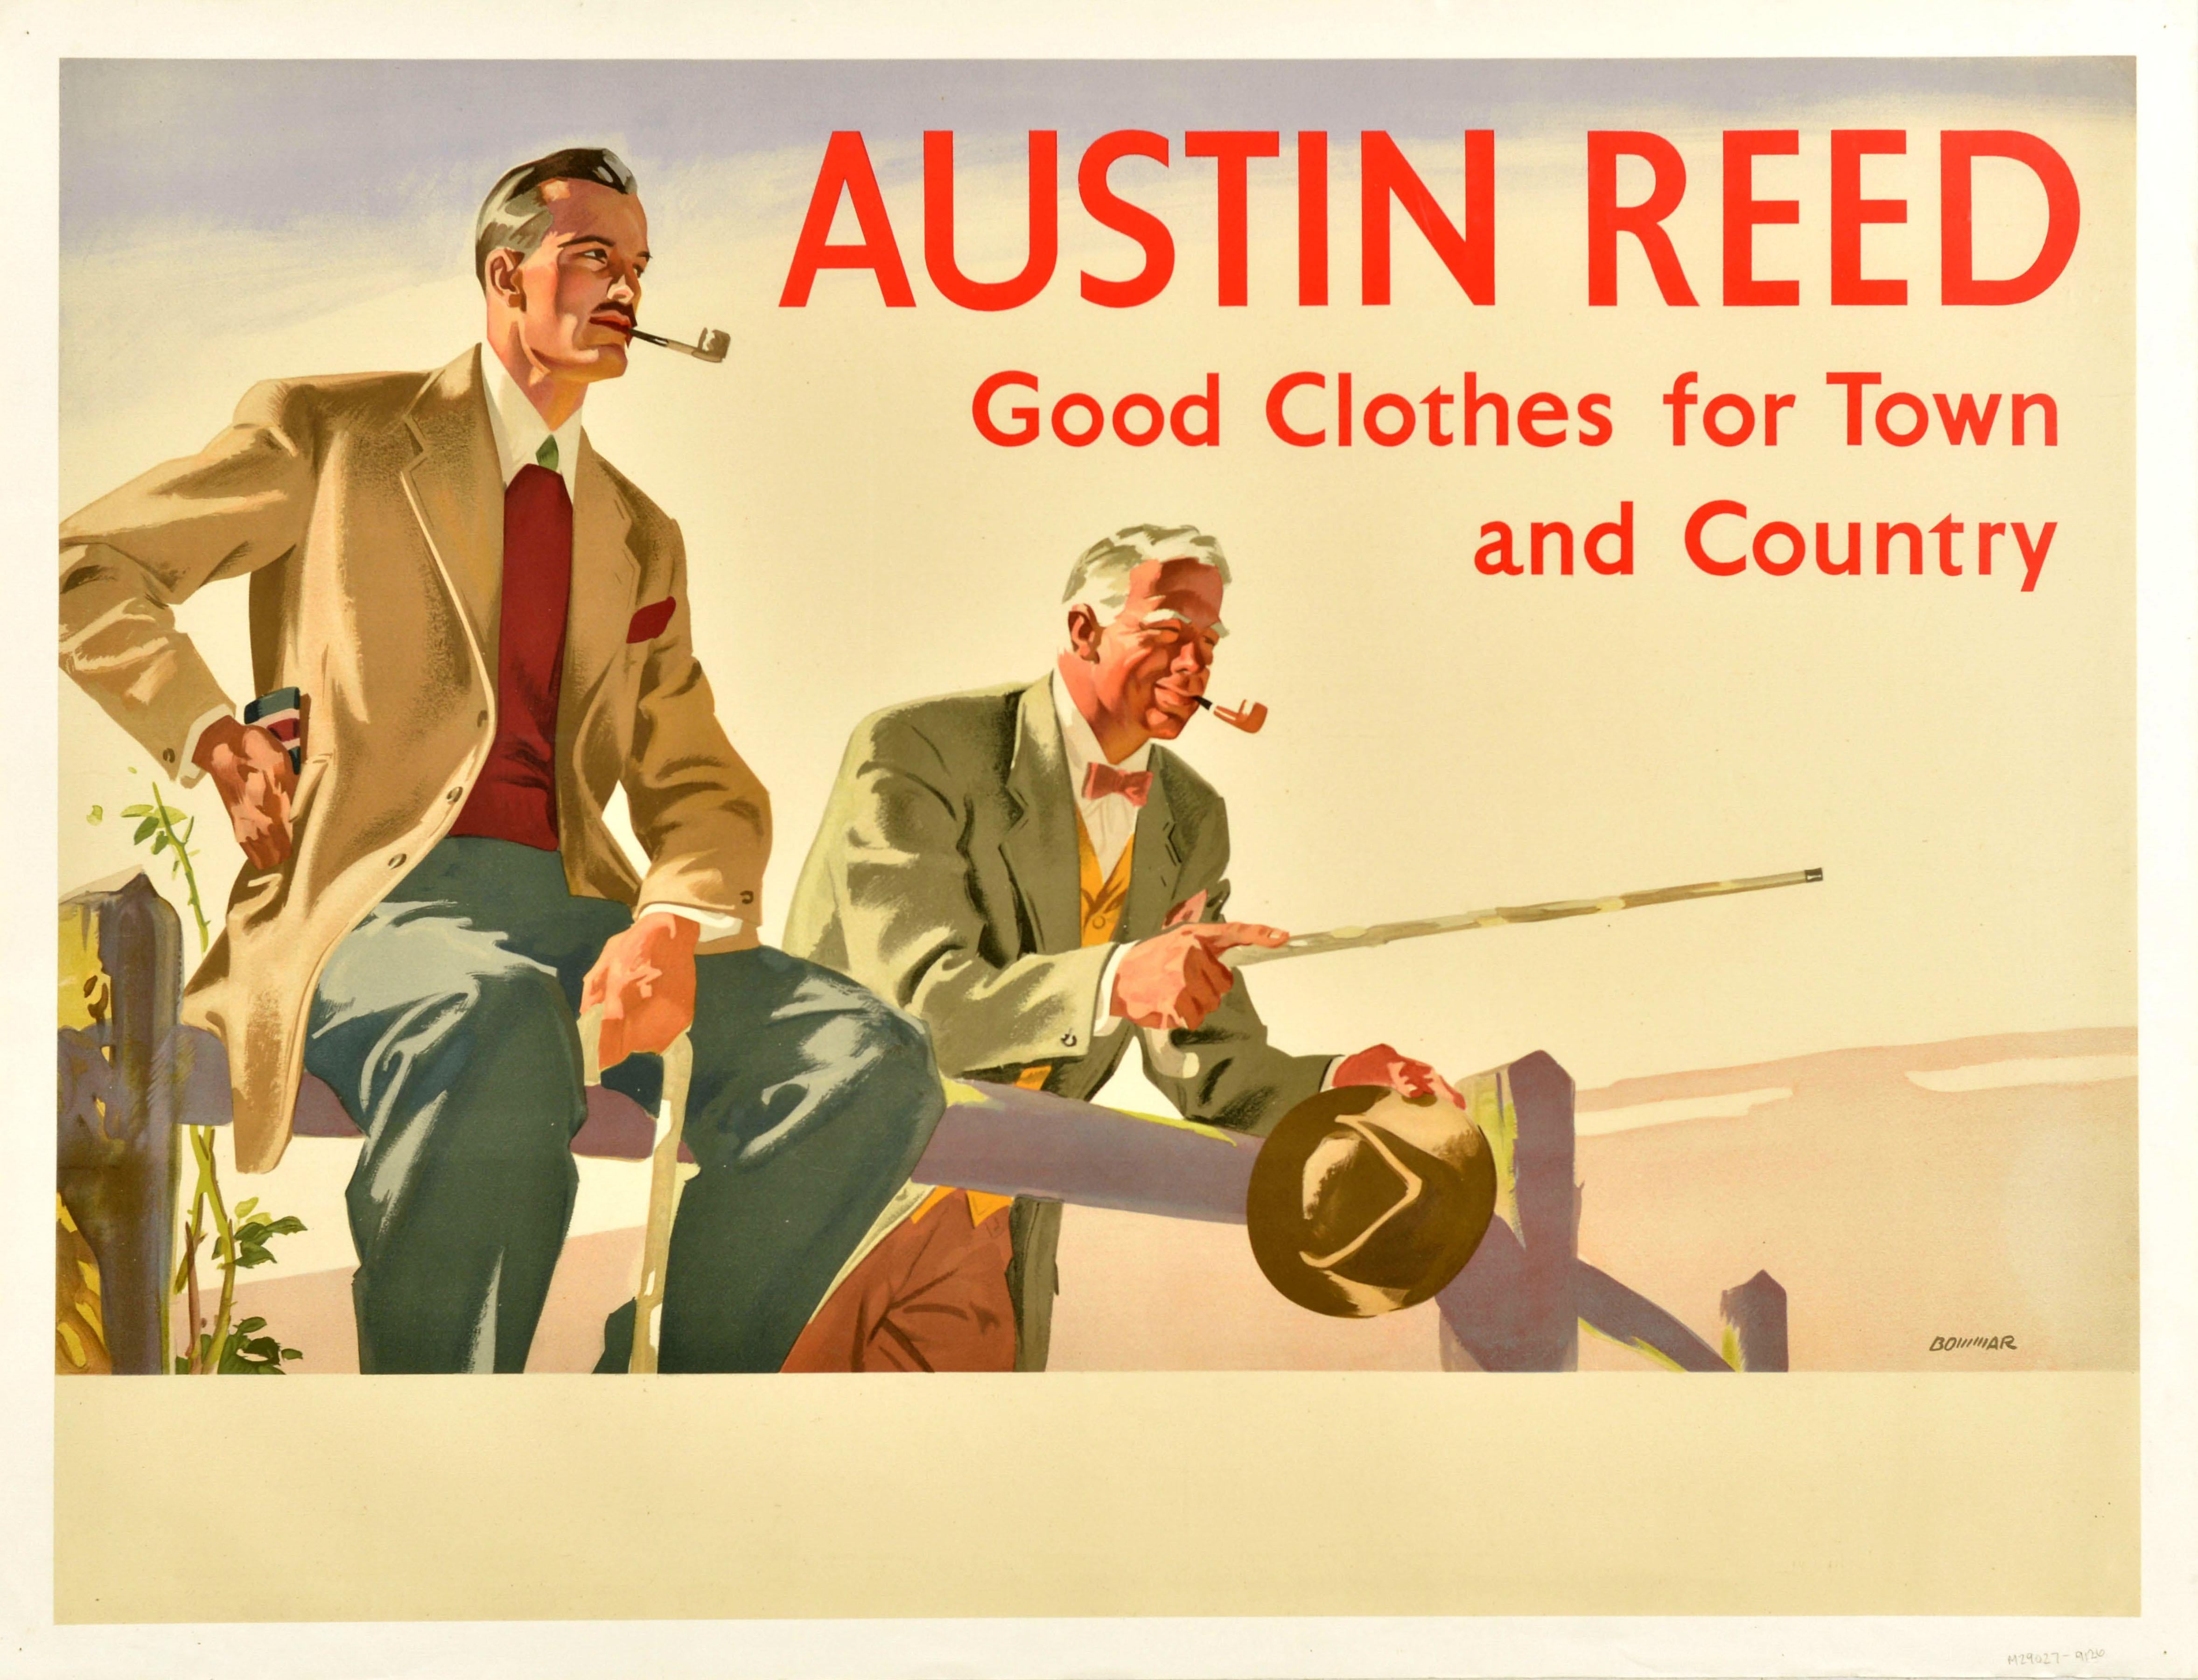 Unknown Print - Original Vintage Fashion Advertising Poster Austin Reed Good Clothes Design Art